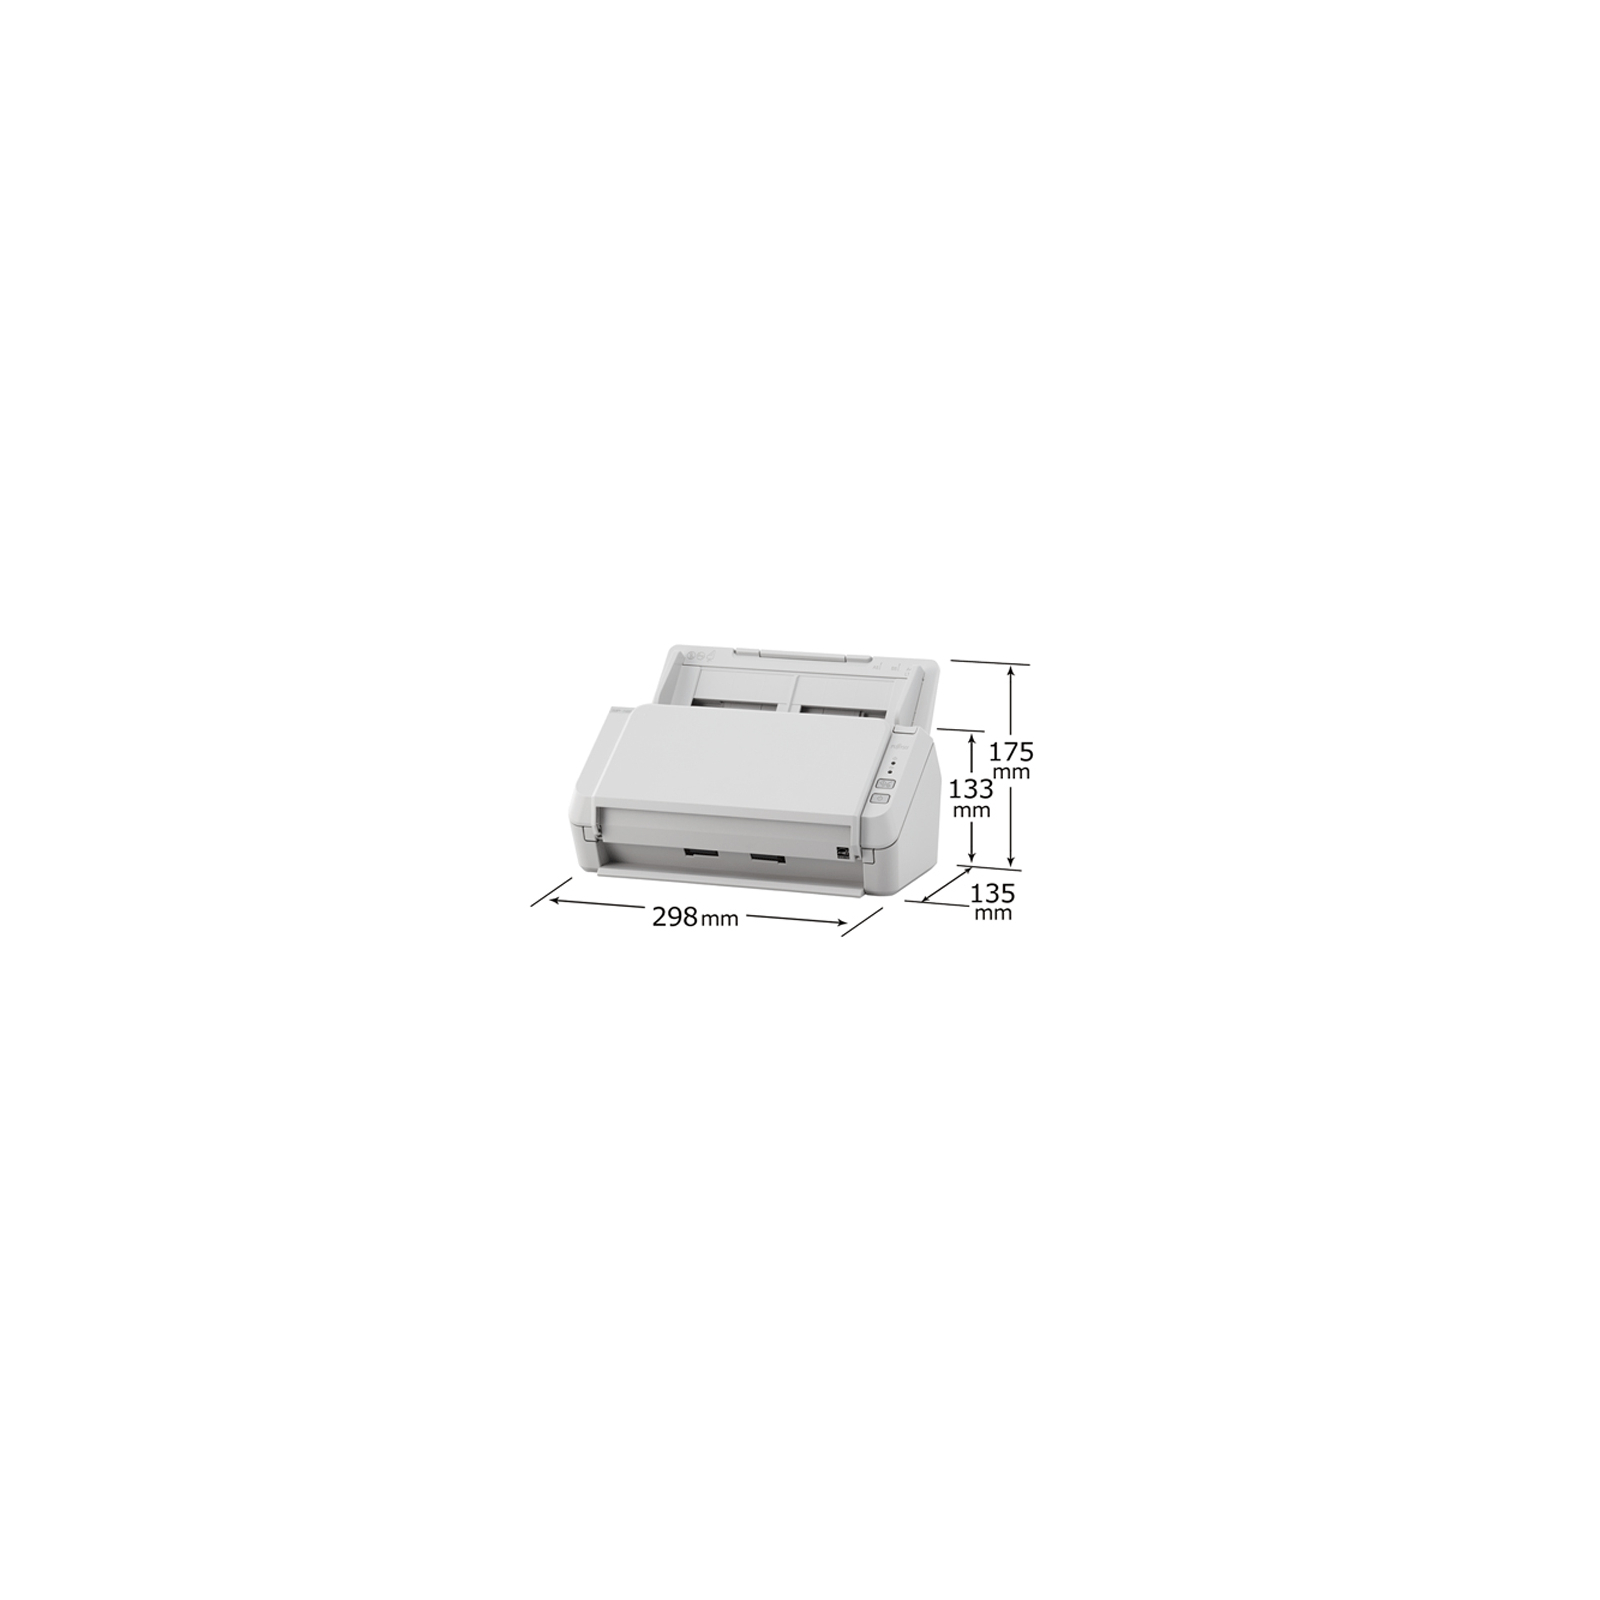 Сканер Fujitsu SP-1125 (PA03708-B011) зображення 6